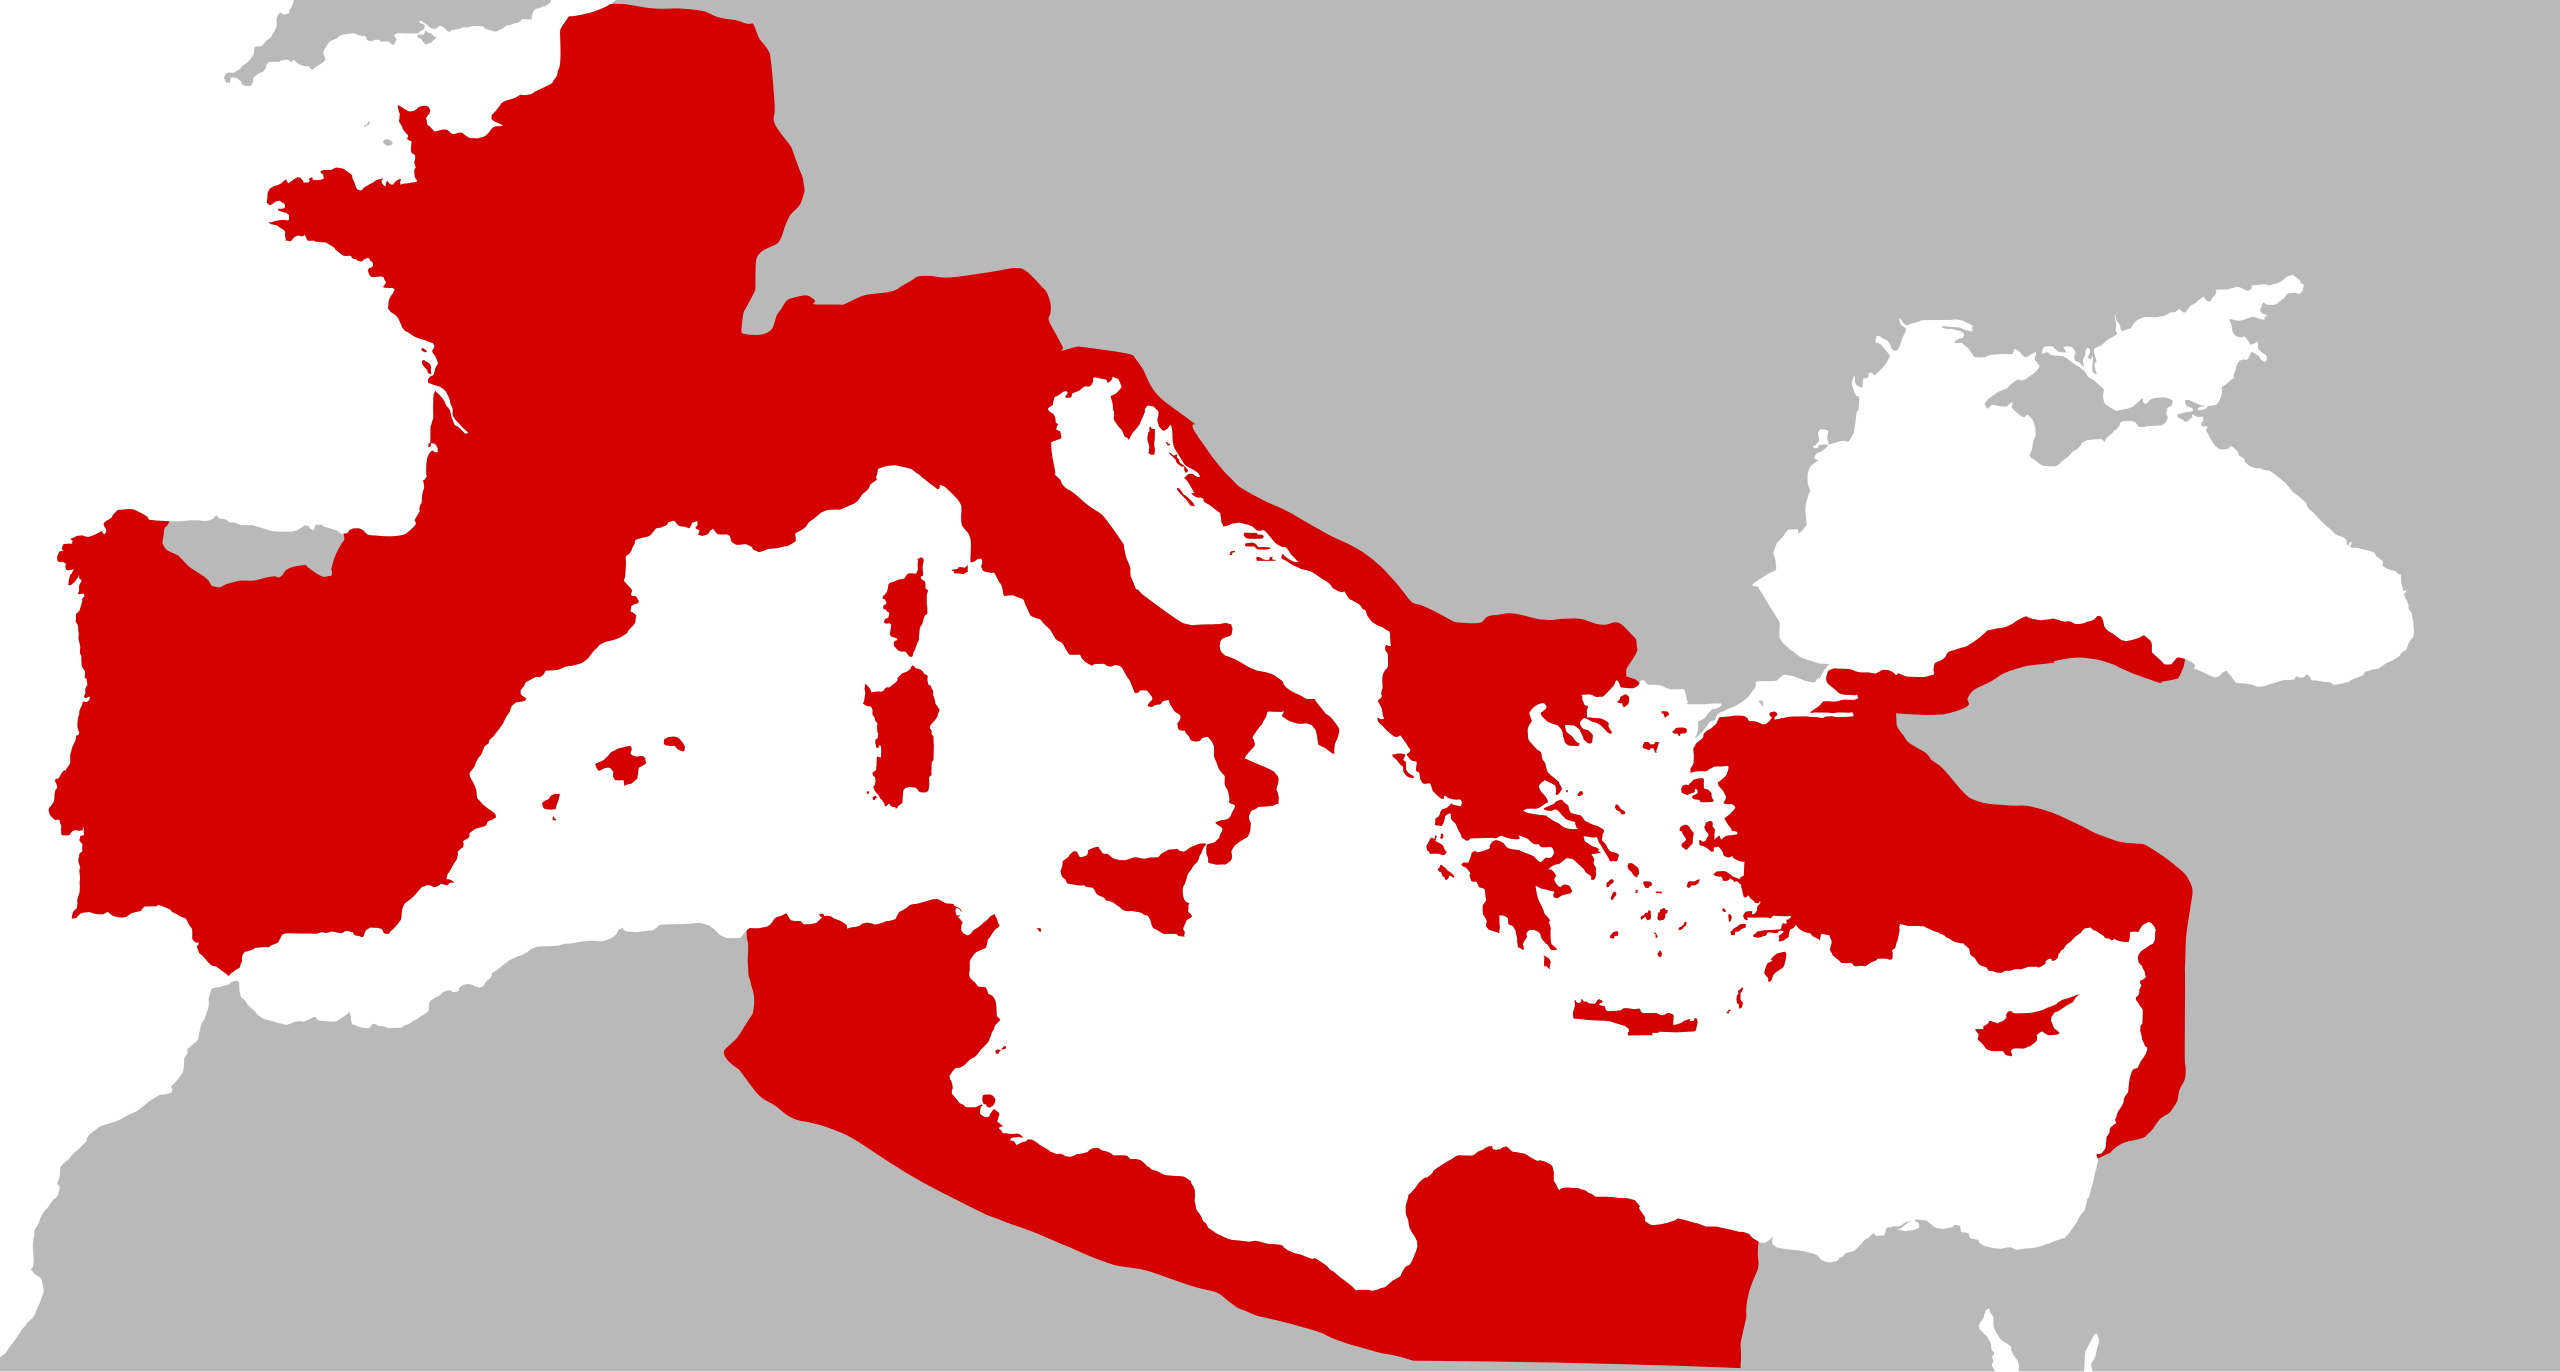 The Roman Republic in 44 BCE